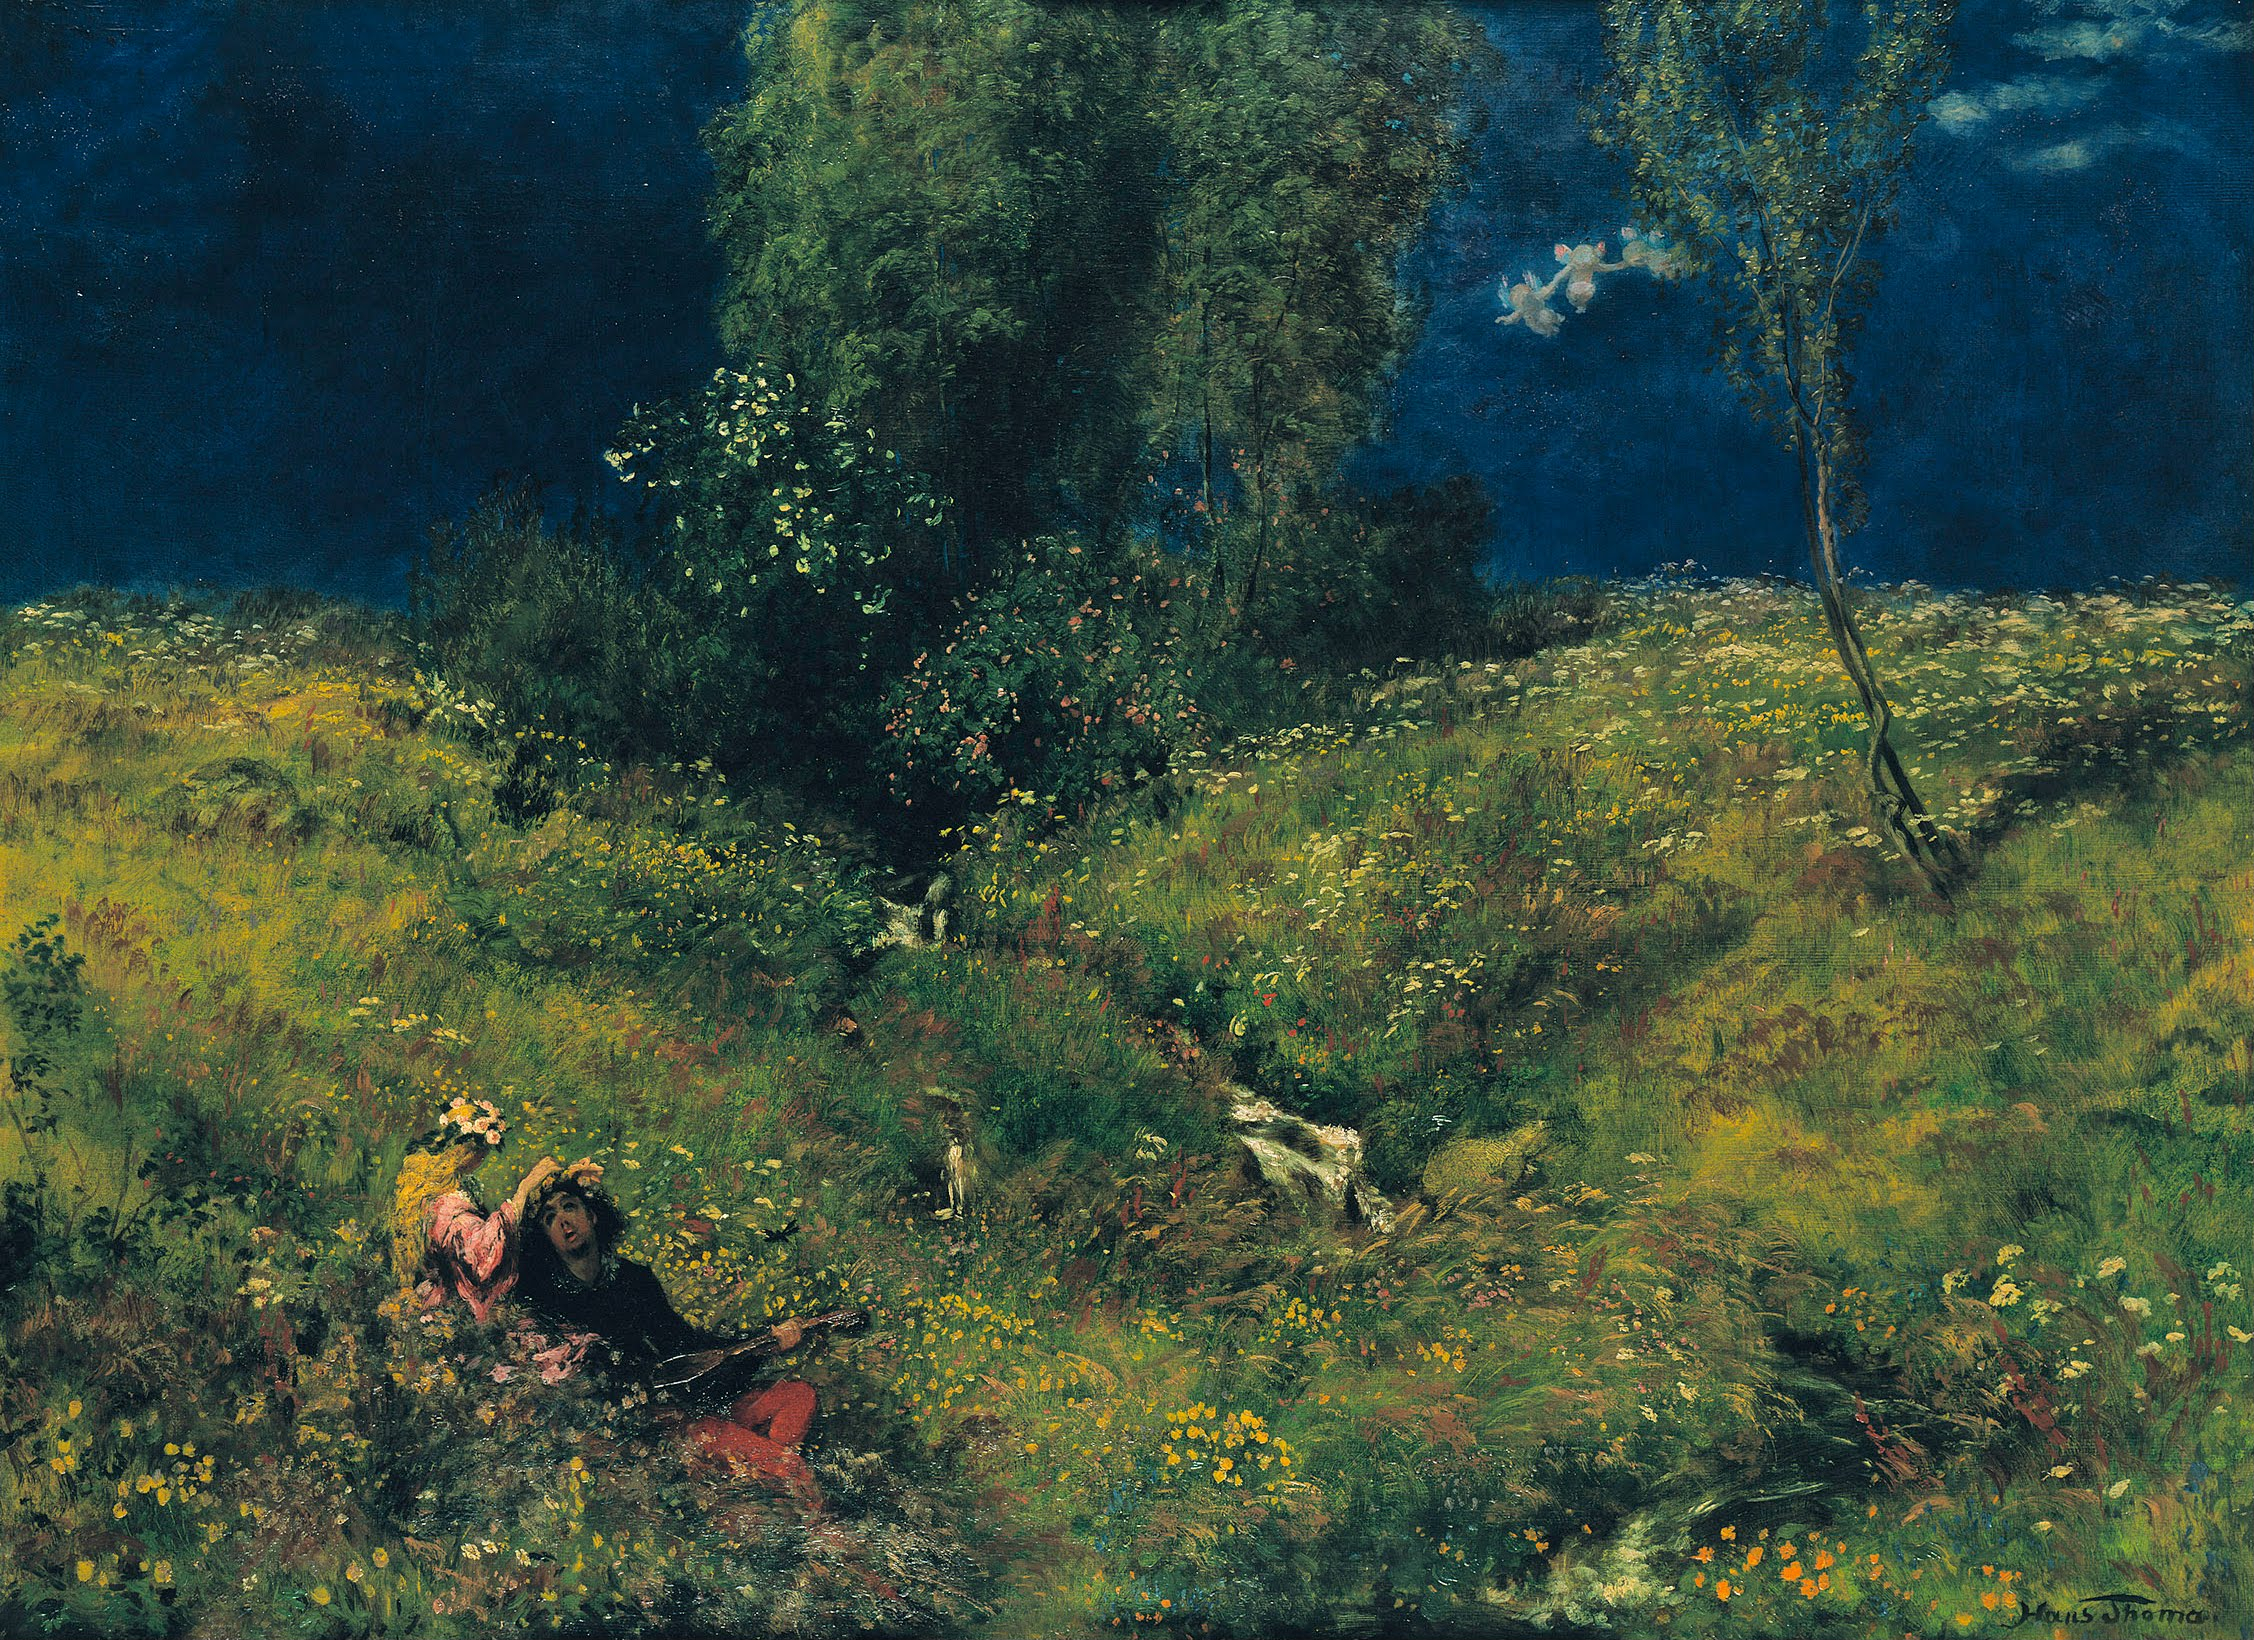 Lato by Hans Thoma - 1872 - 104 x 76.0 cm 